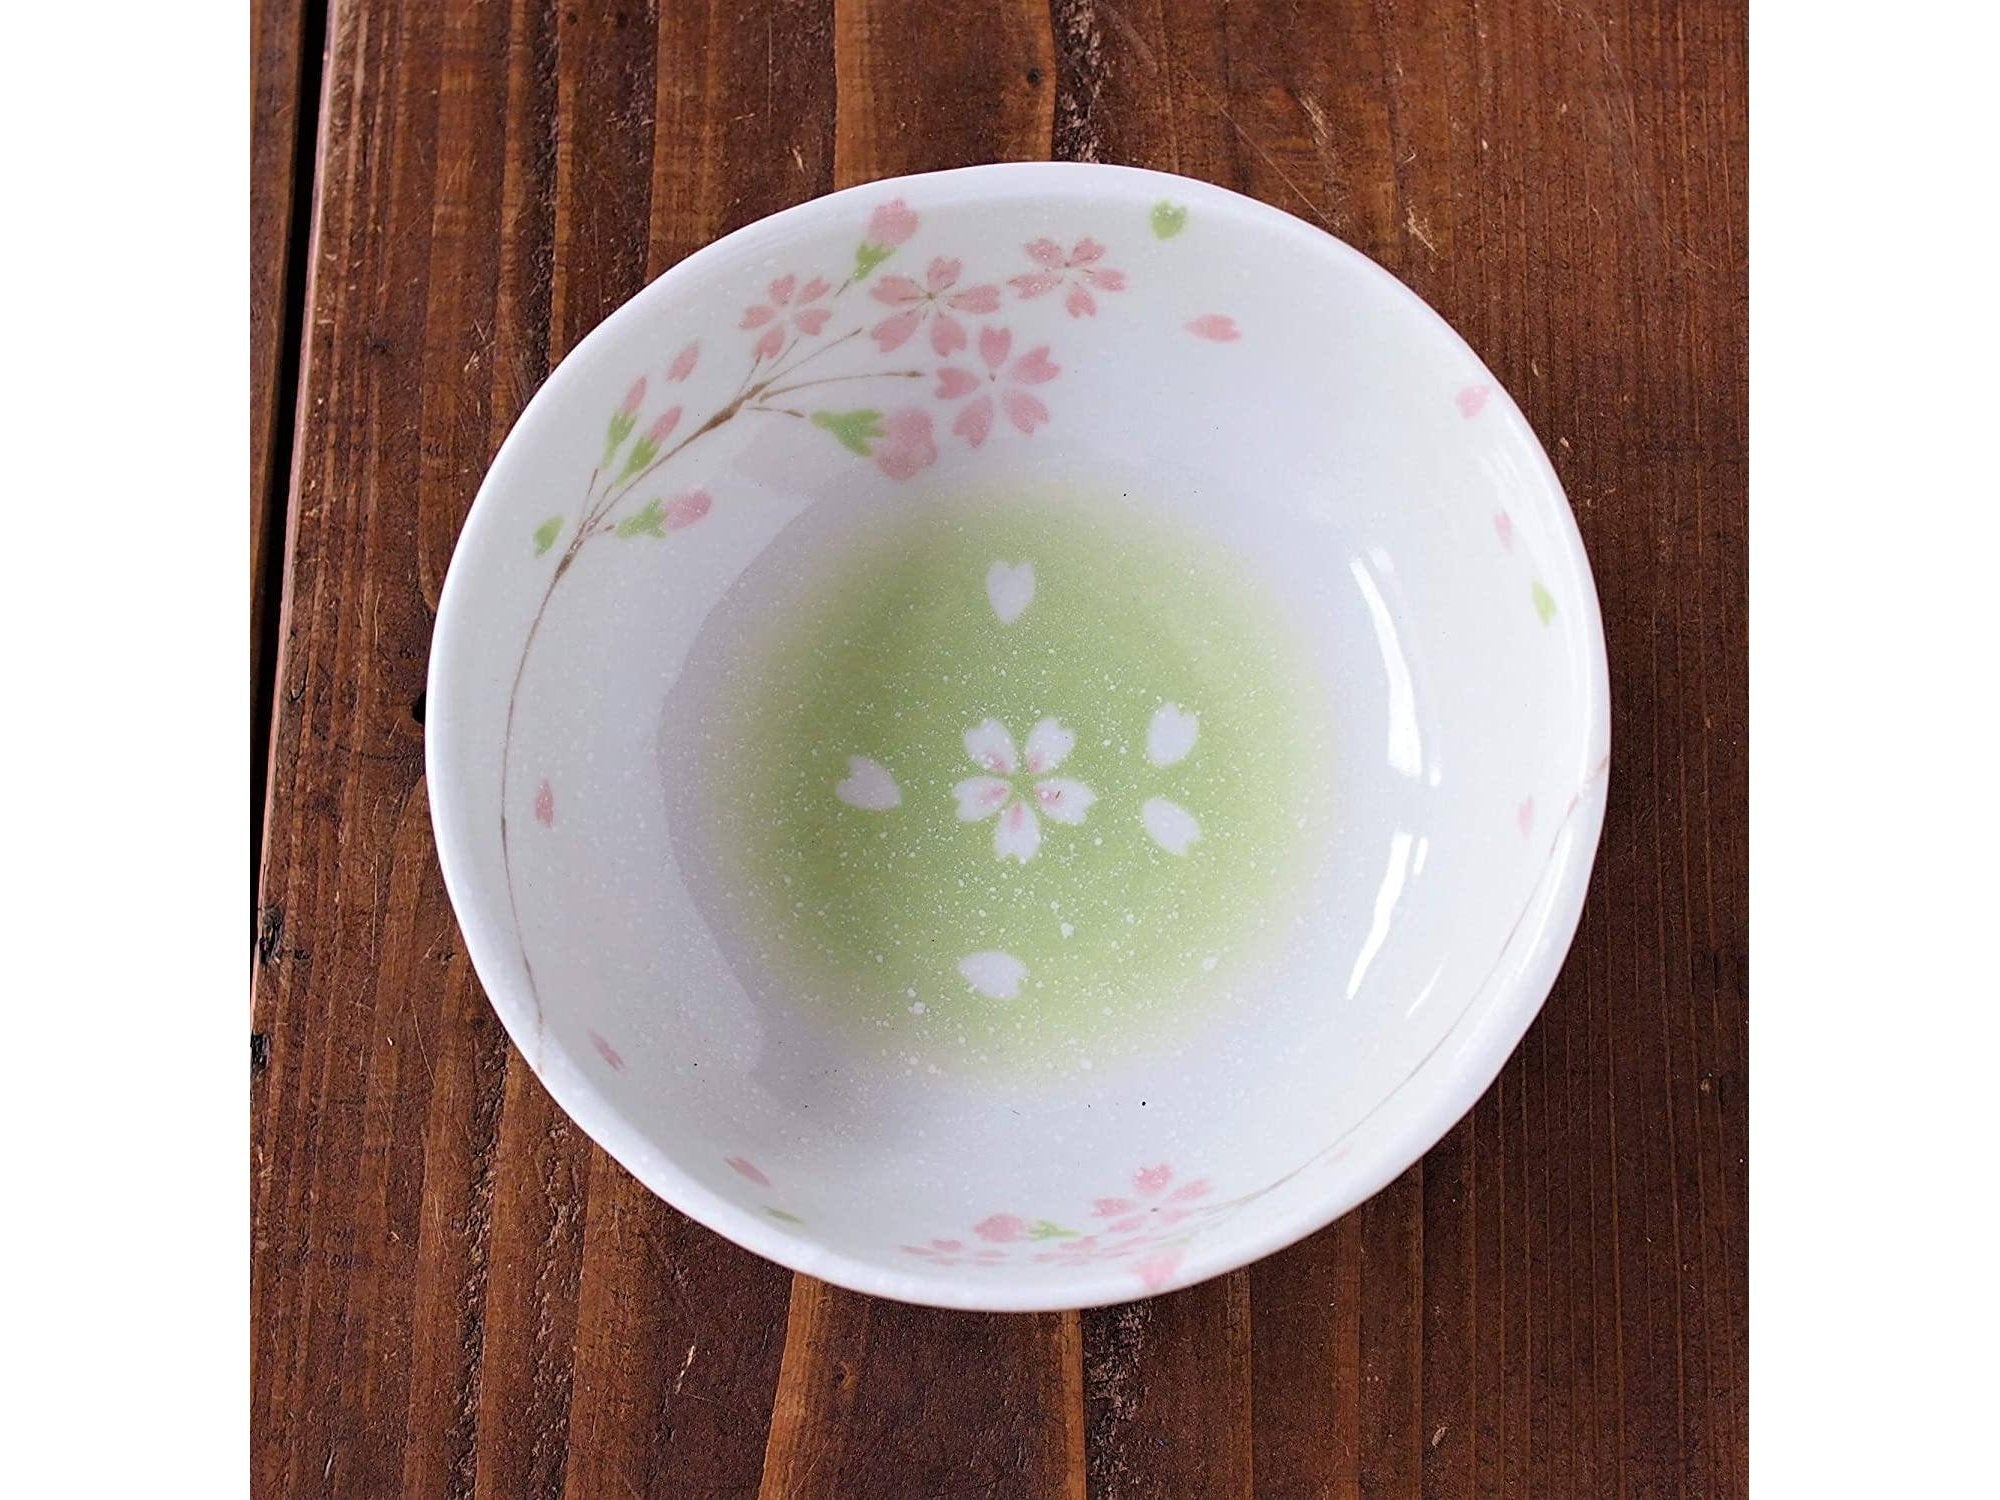 Mino Sakura Biyori Triangular Bowl Size cm